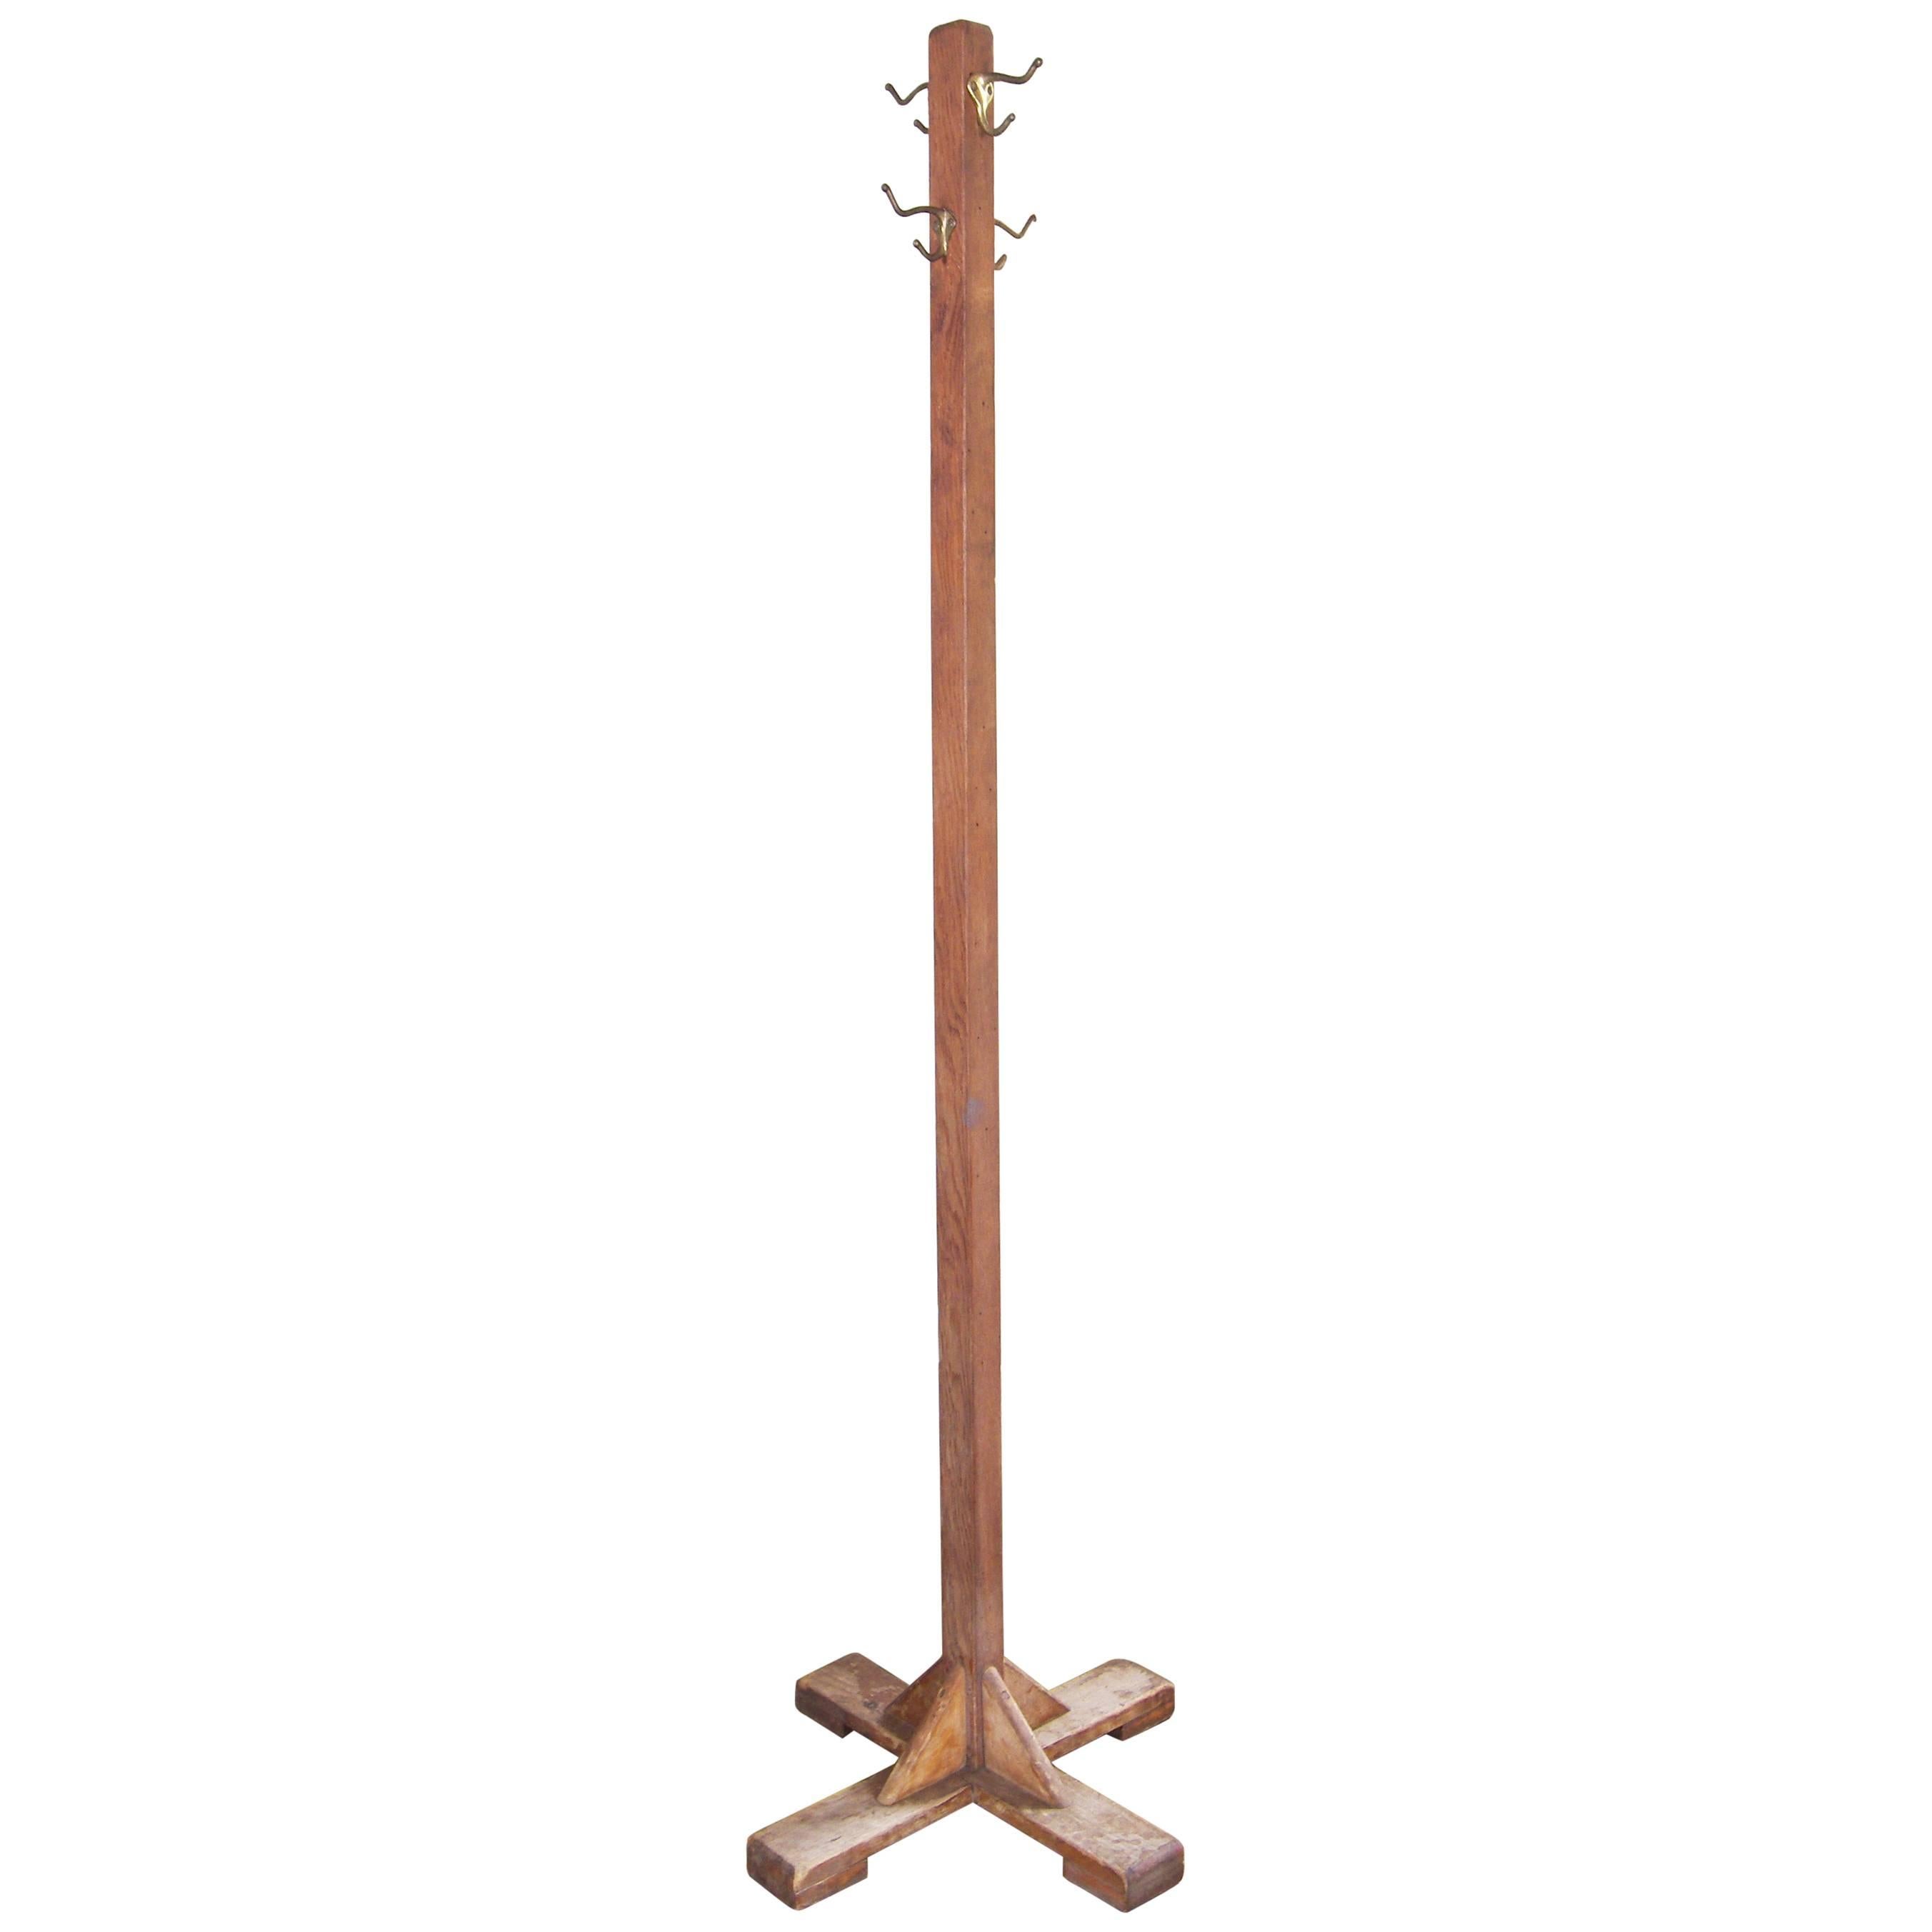 Vintage Industrial Wooden Coat Stand or Rack